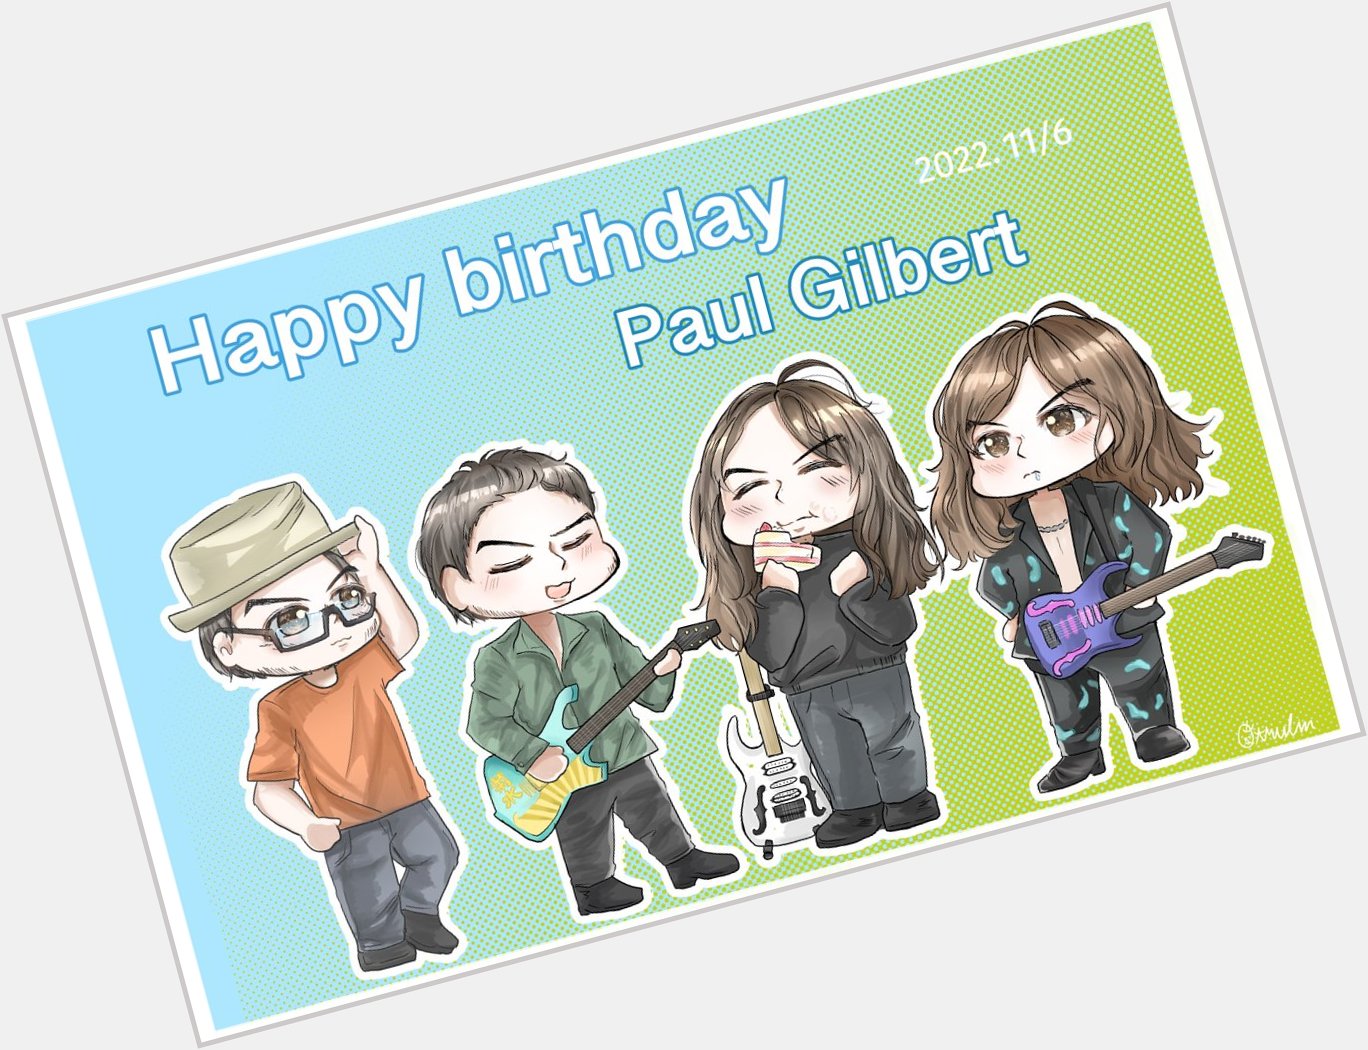 Happy birthday Paul Gilbert    